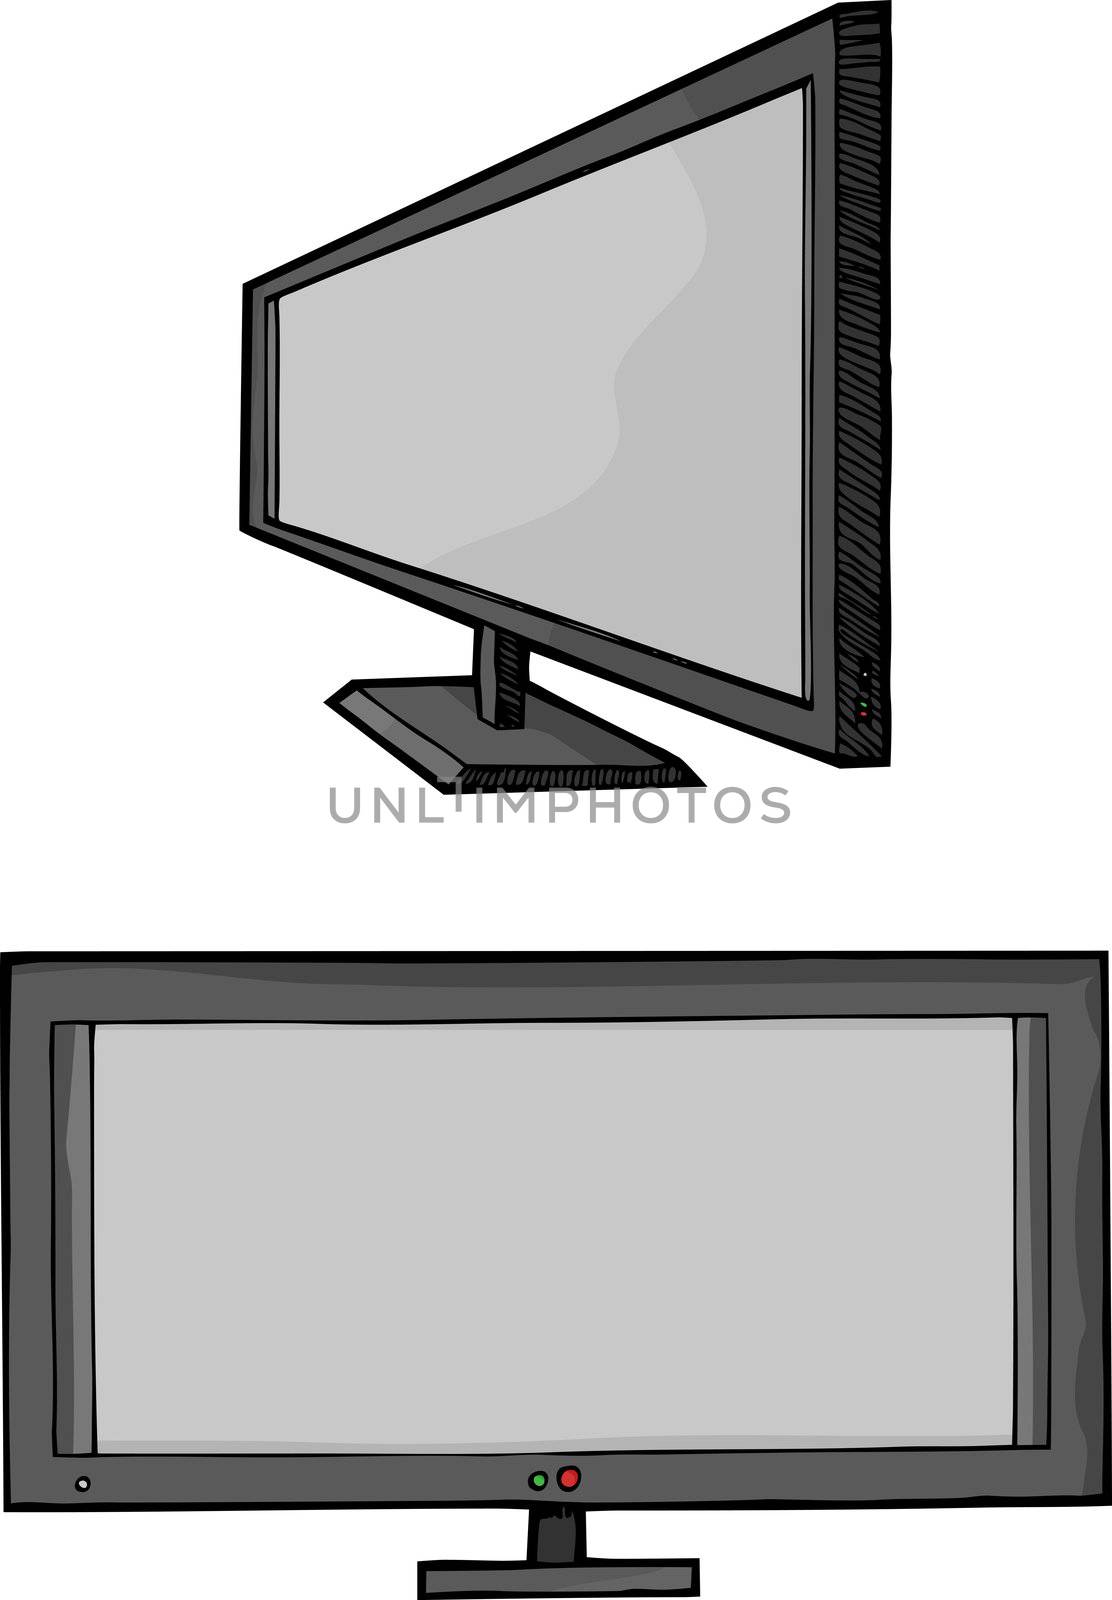 Widescreen Flat Panel TV by TheBlackRhino